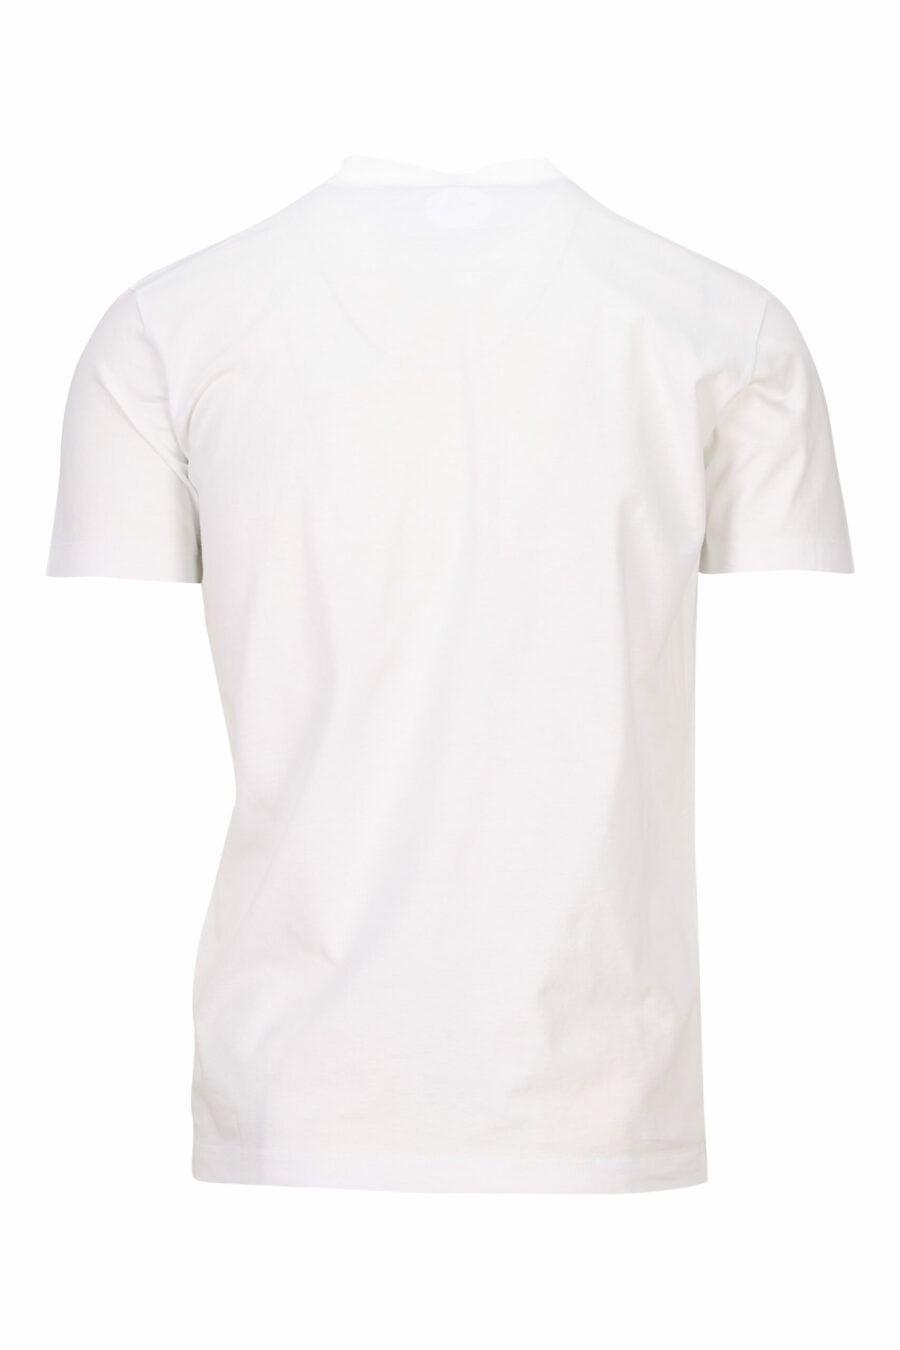 Camiseta blanca con maxilogo perro baloncesto - 8054148332594 1 scaled